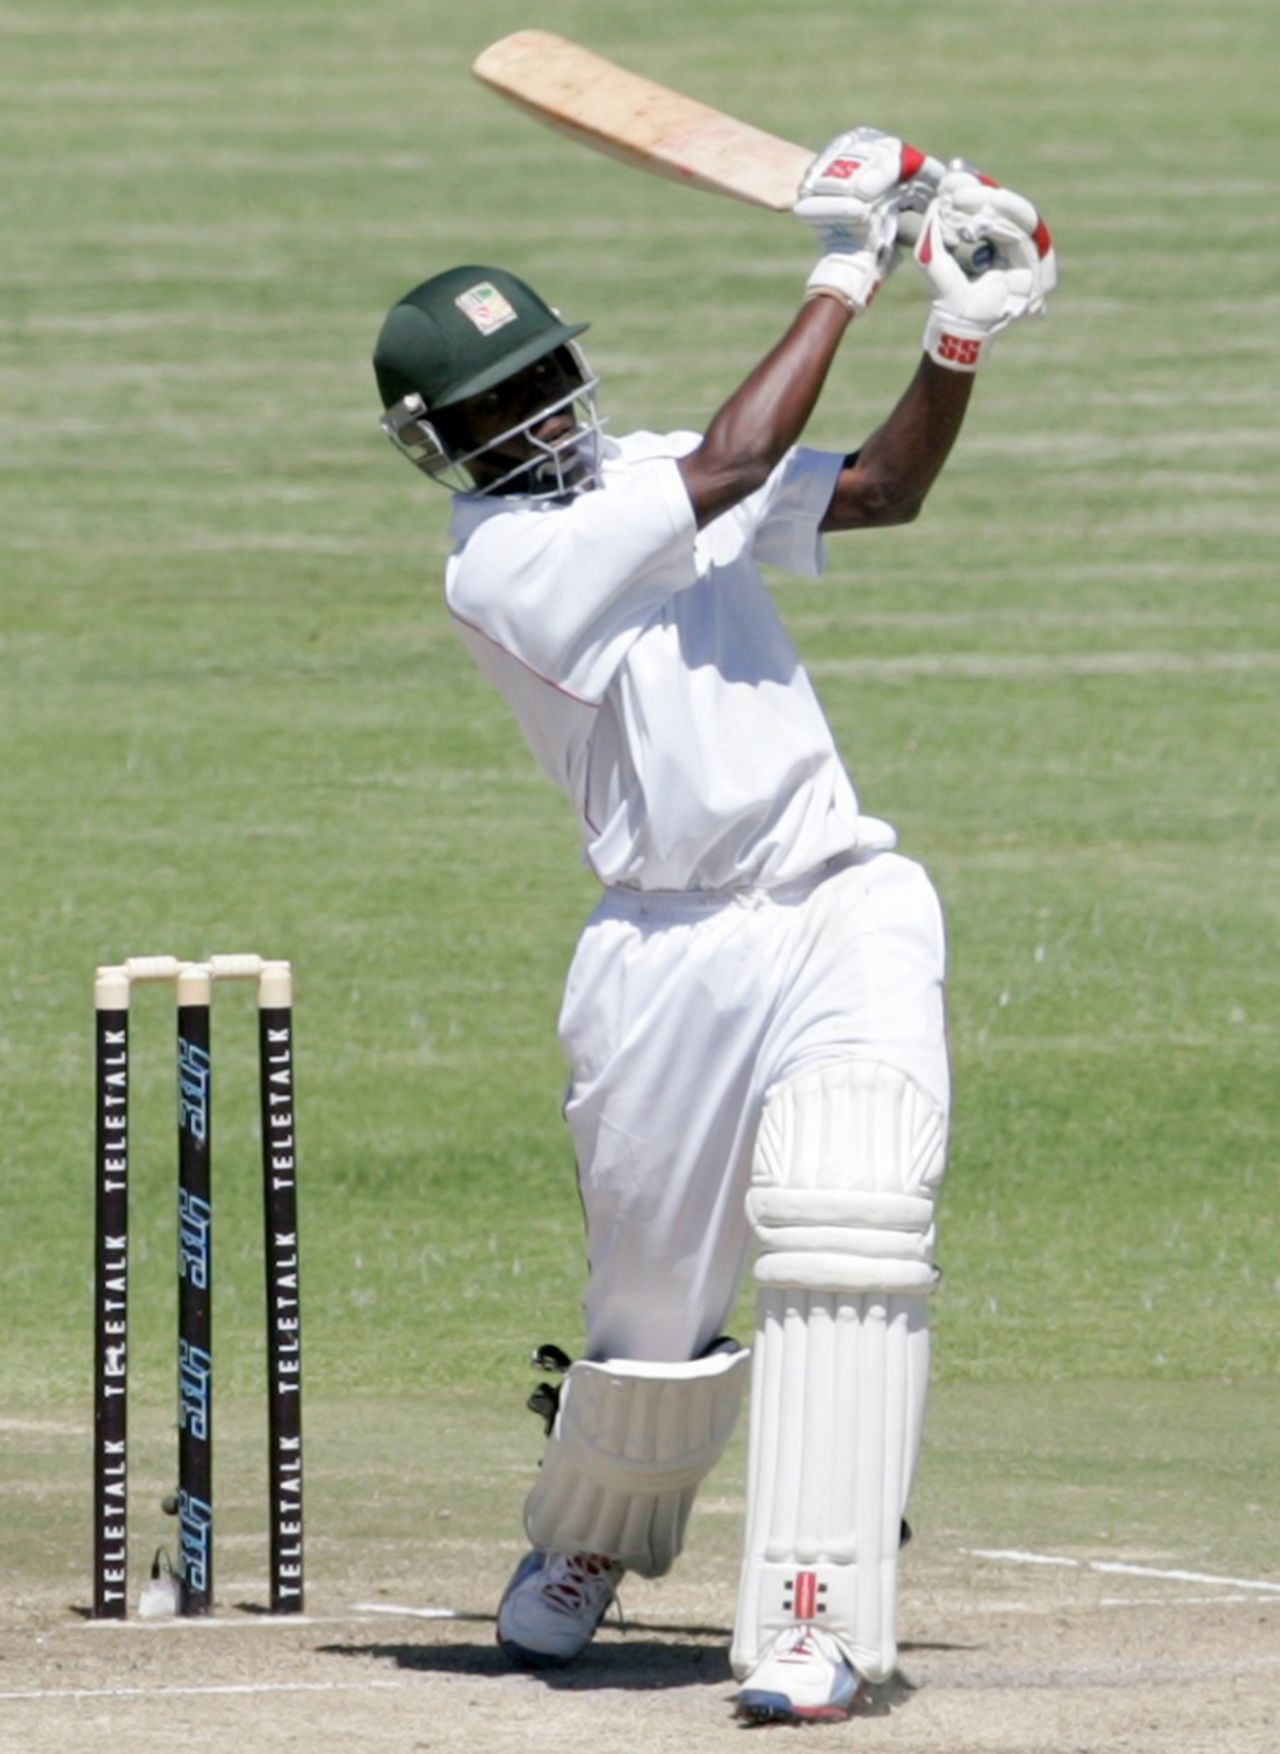 Richmond Mutumbami hits over the top, Zimbabwe v Bangladesh, 2nd Test, Harare, 3rd day, April 27, 2013